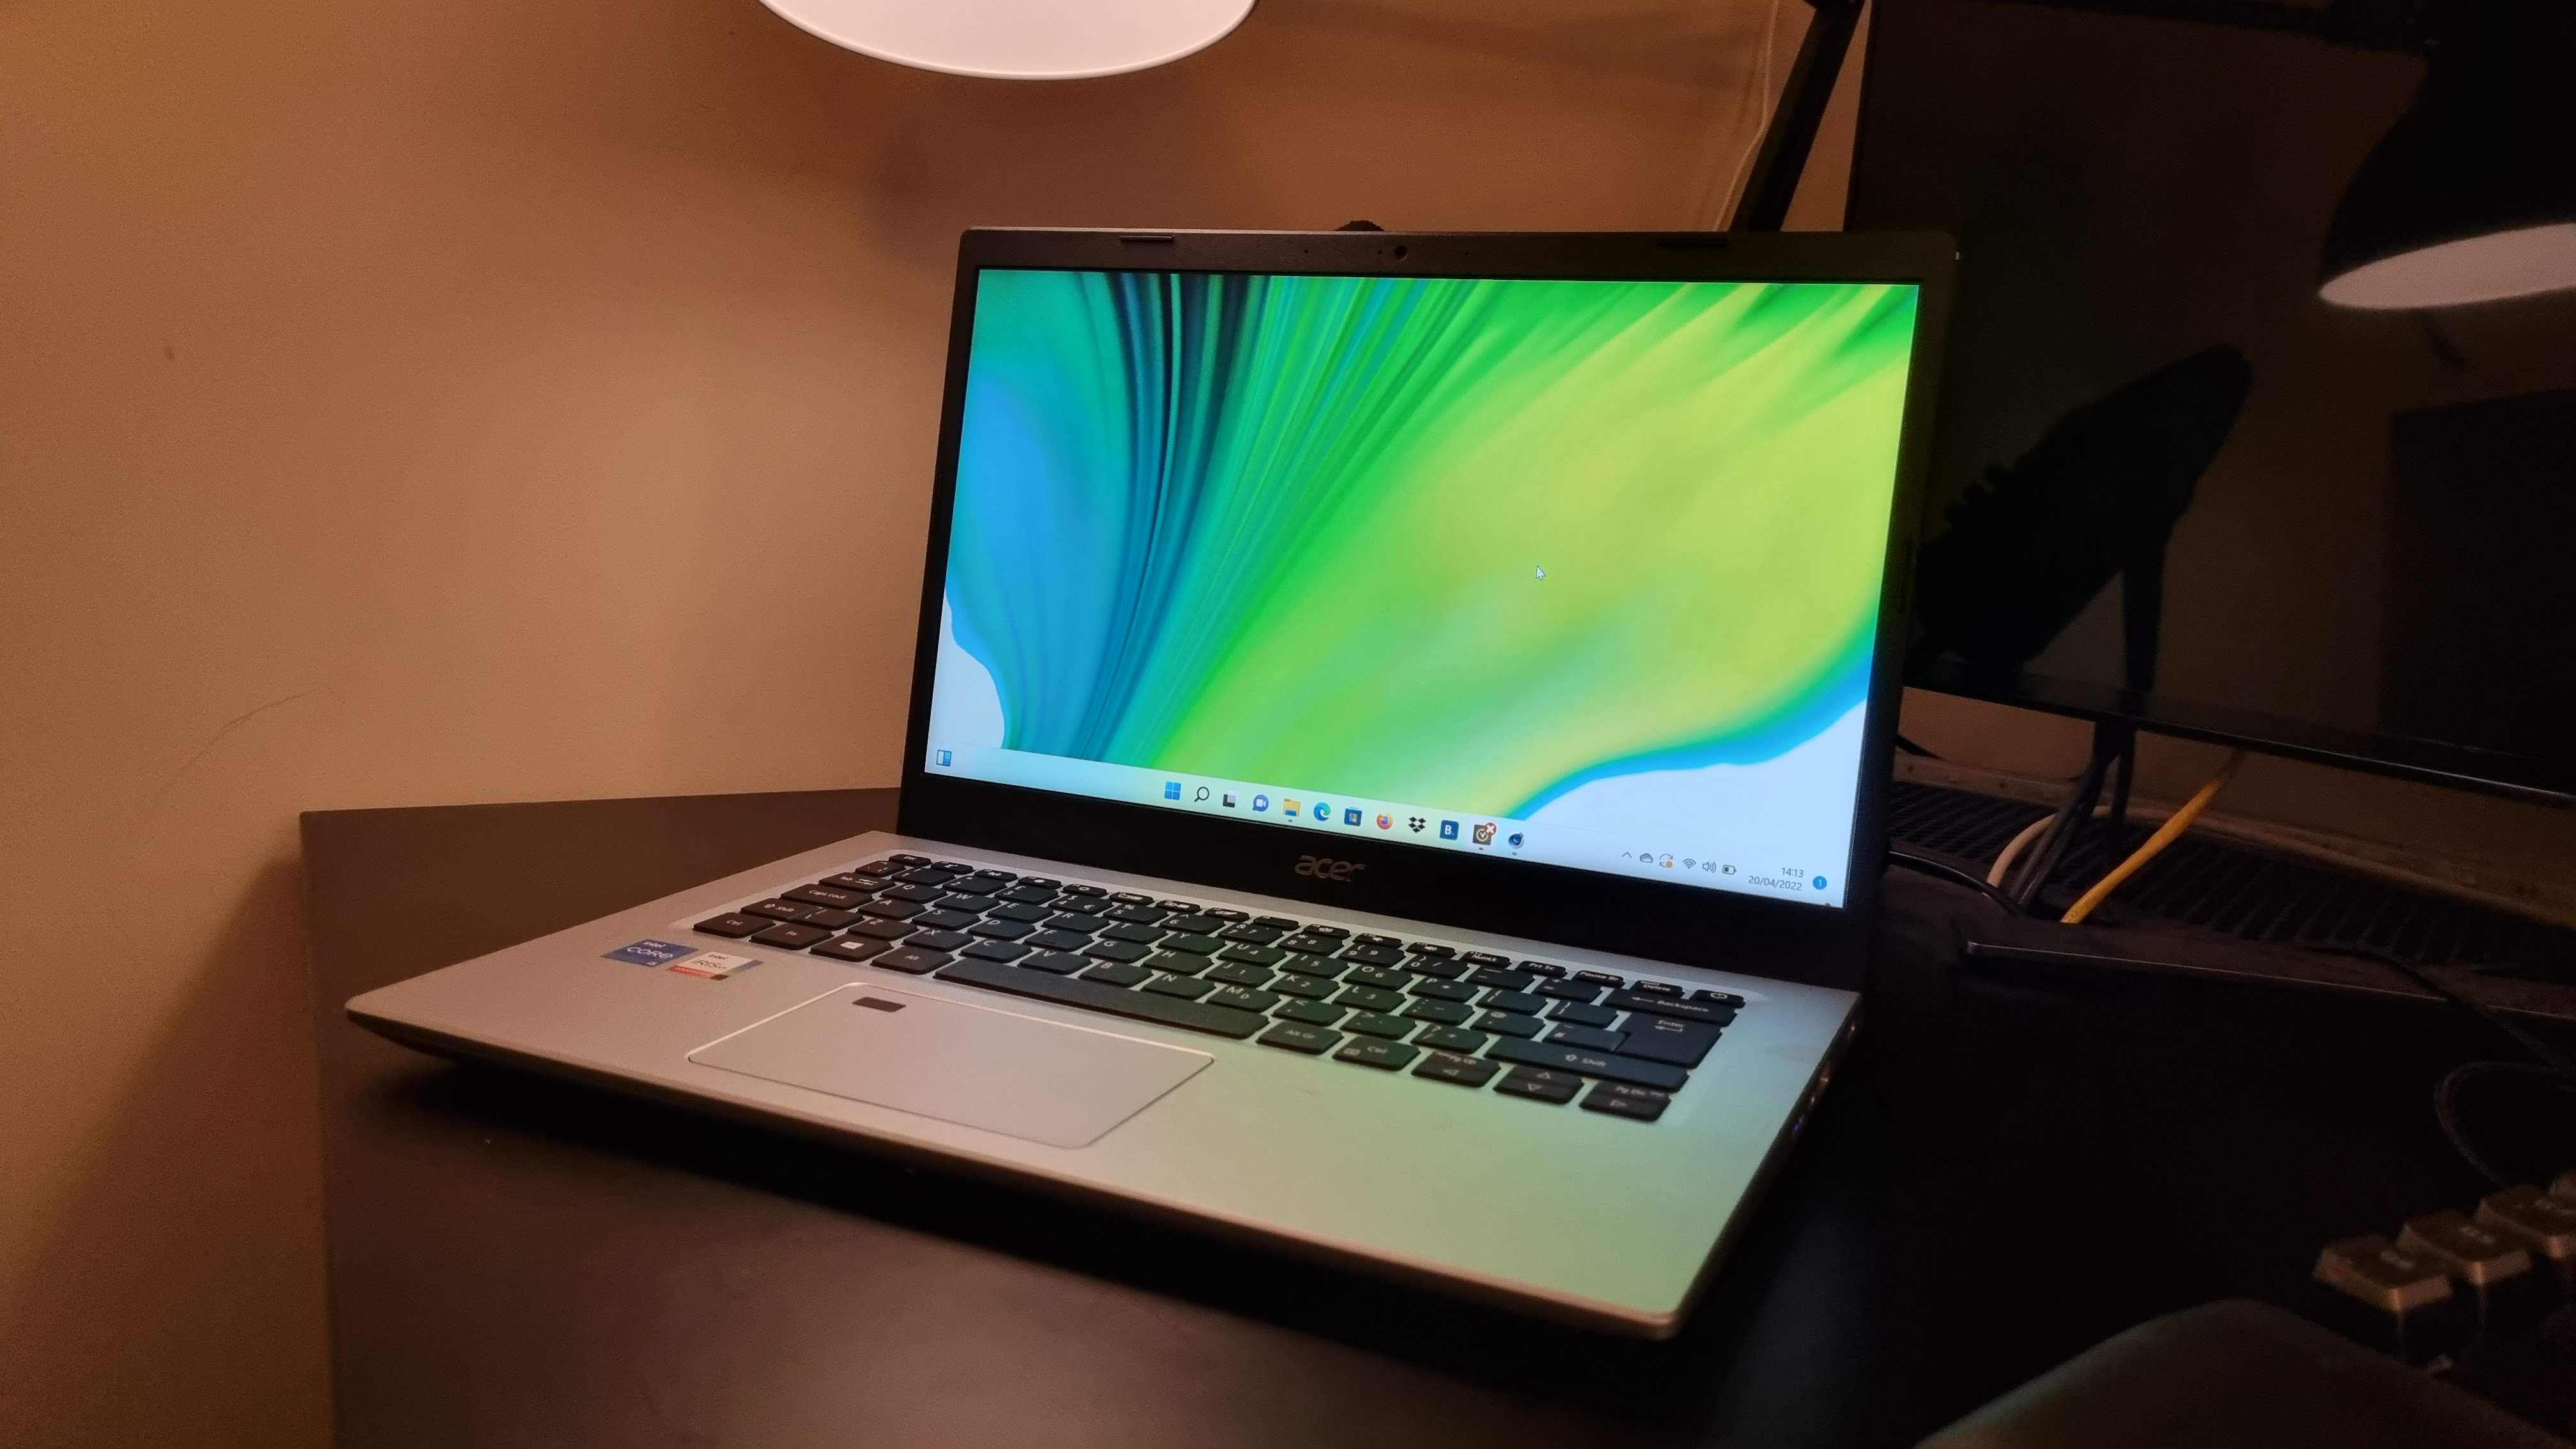 The Acer Aspire 5 laptop on a desk